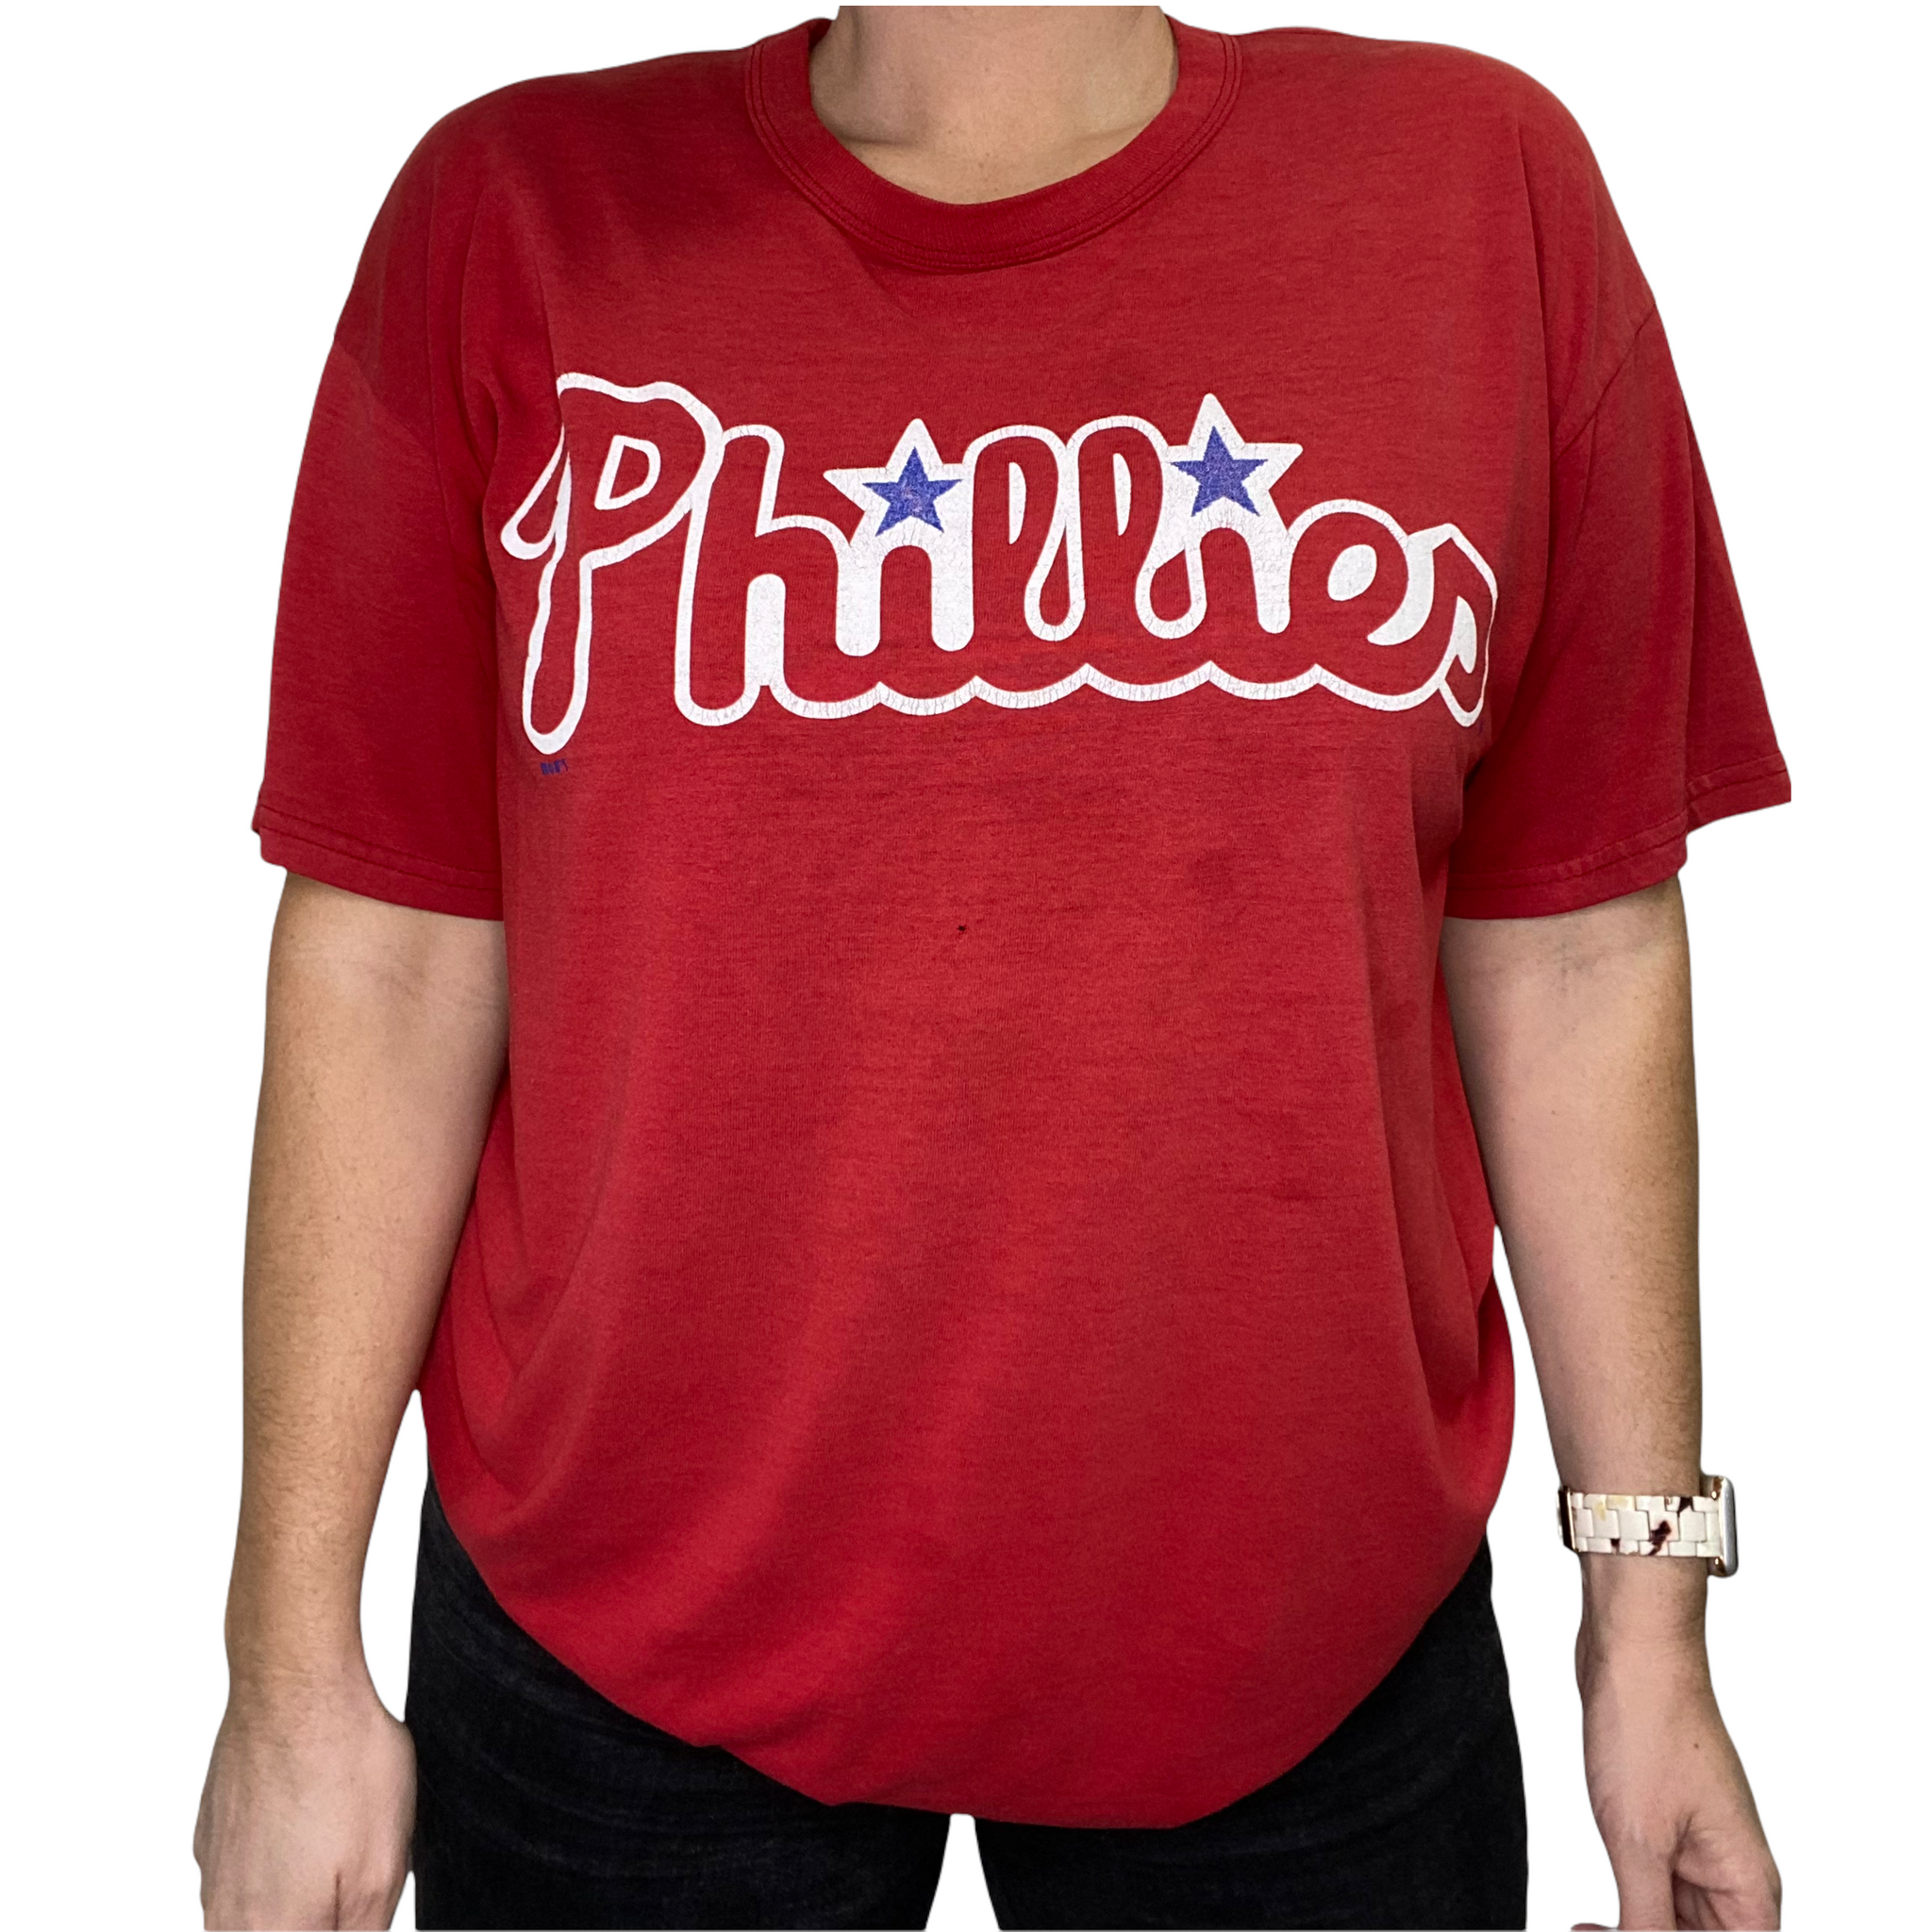 Philadelphia Phillies Jersey Logo  Phillies, Philadelphia phillies,  Philadelphia phillies logo